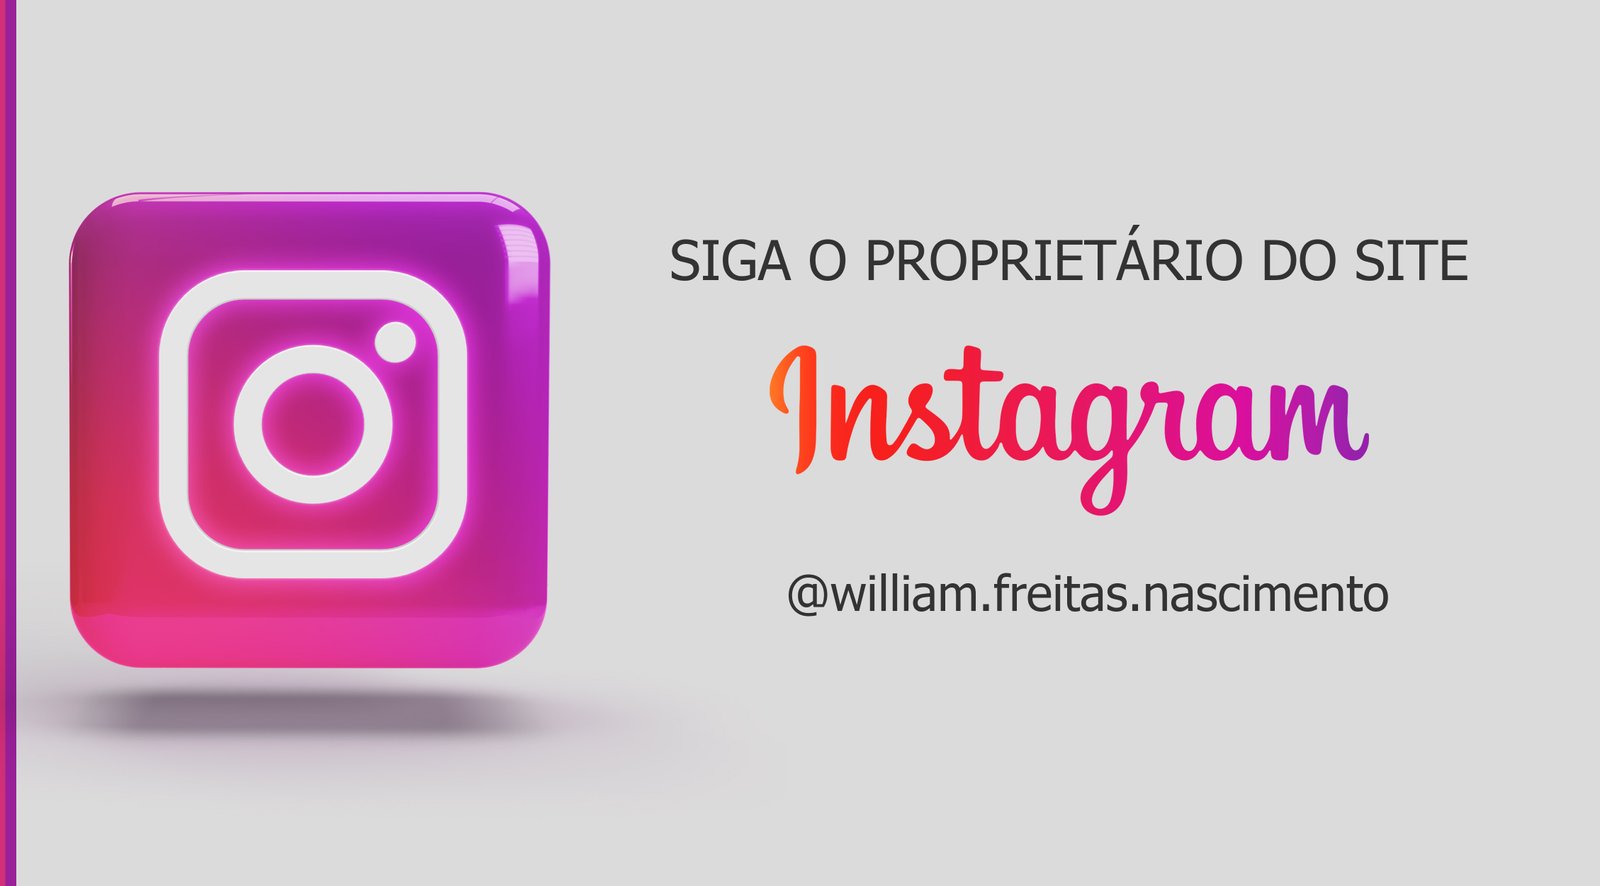 follower_acquisition_banner_for_instagram-Recuperado-Recuperado